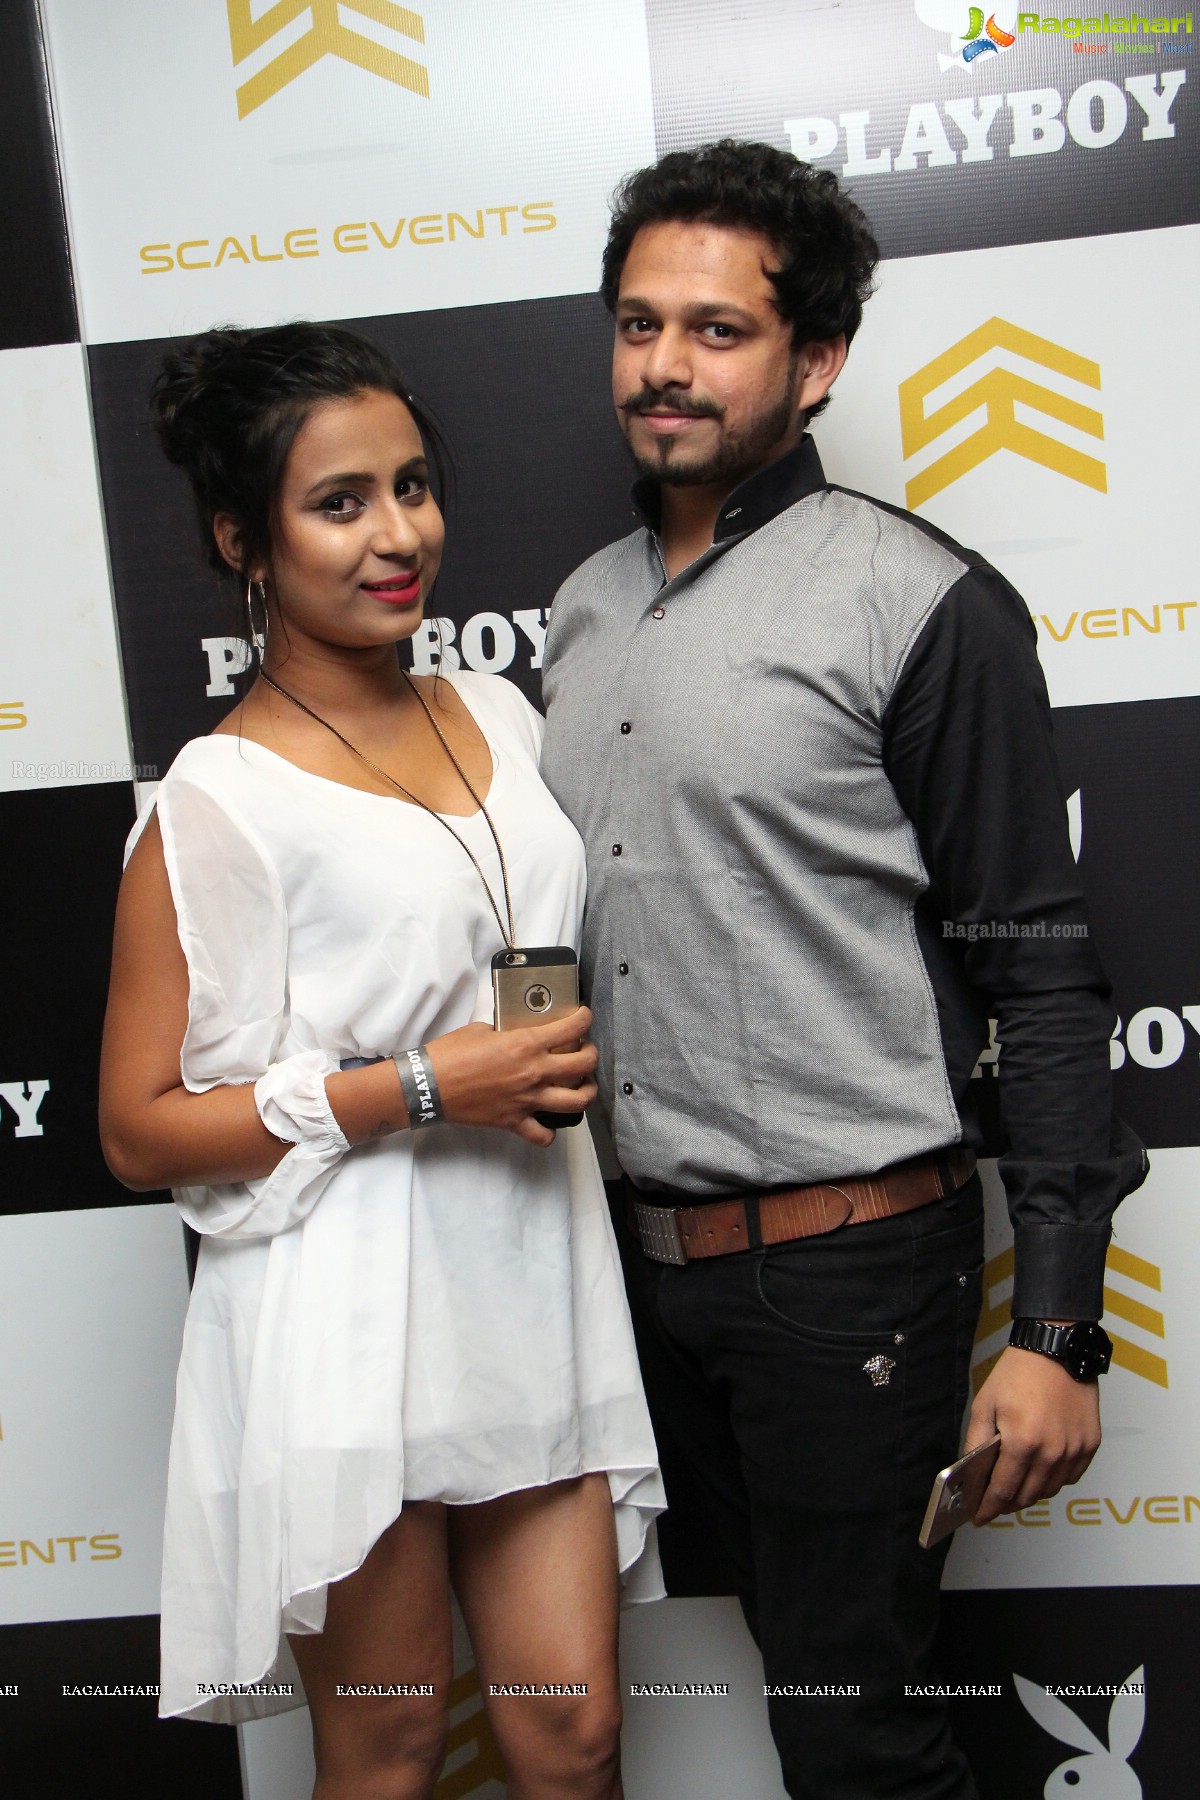 Club Night with DJ Piyush at Playboy Club, Hyderabad